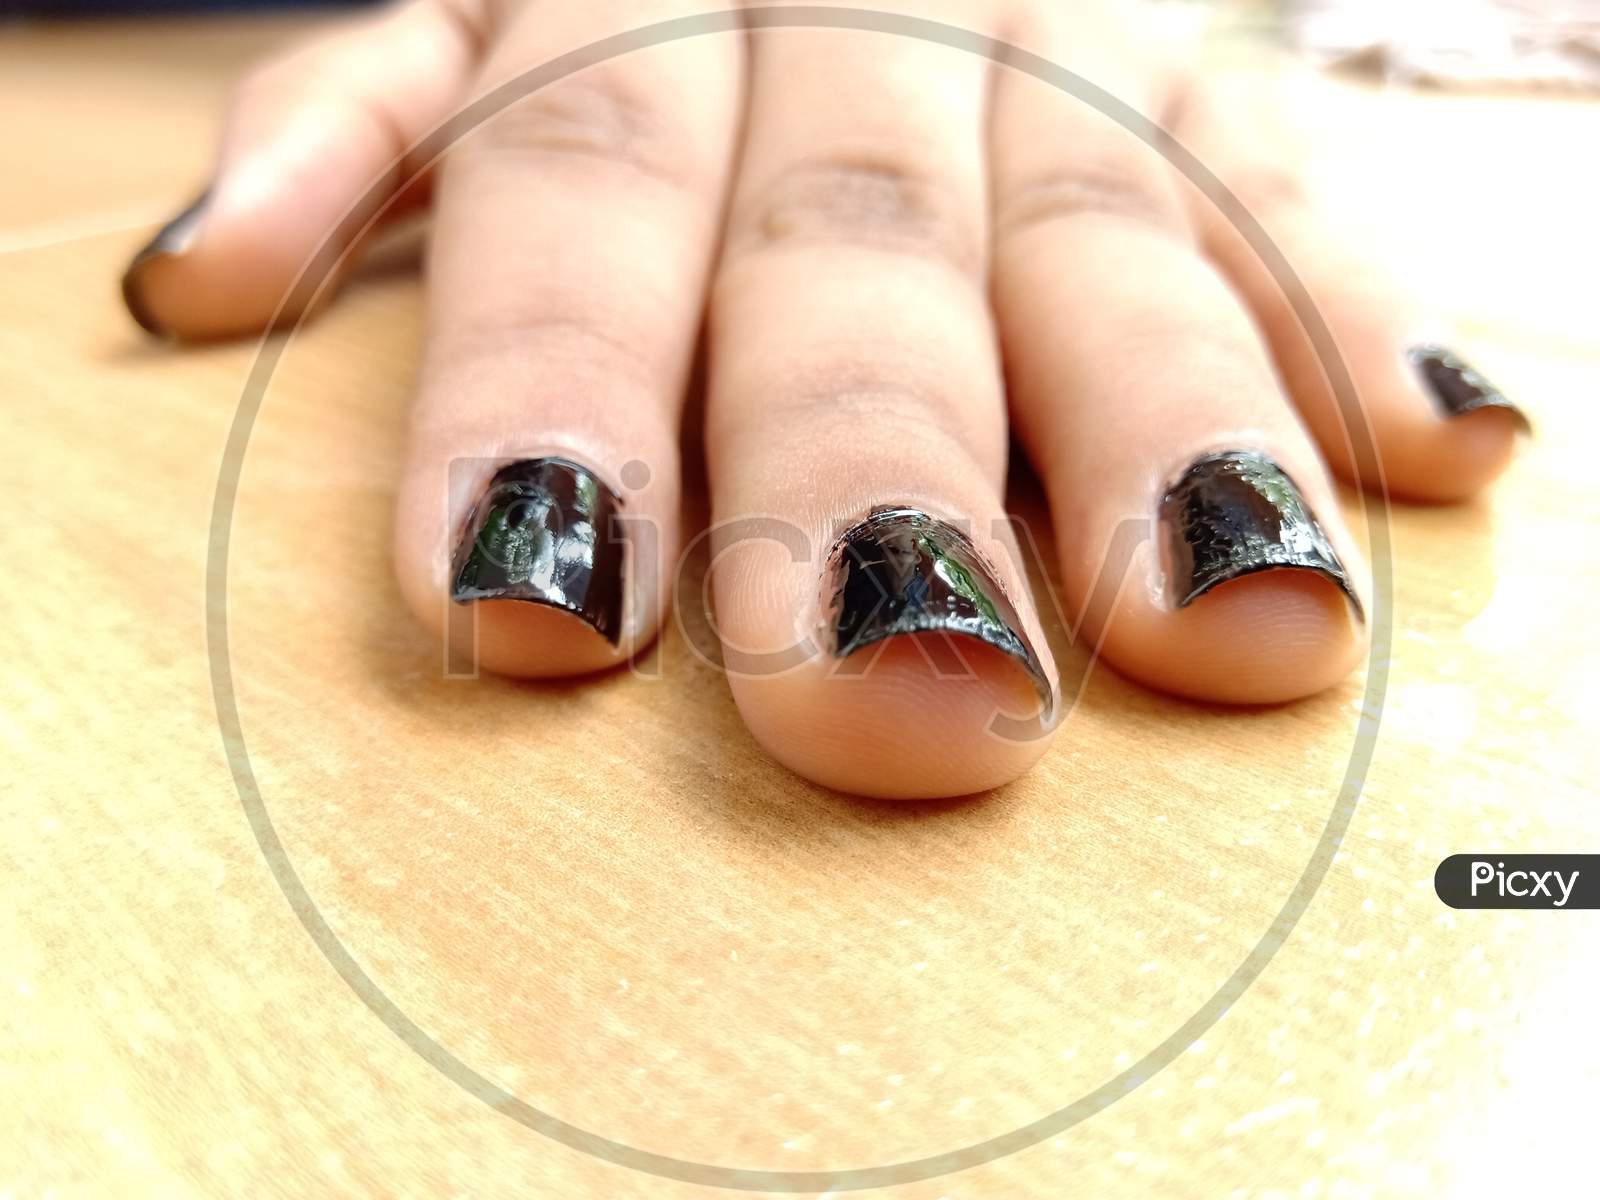 A Closeup Of Black Nail Polished Hand On Table.